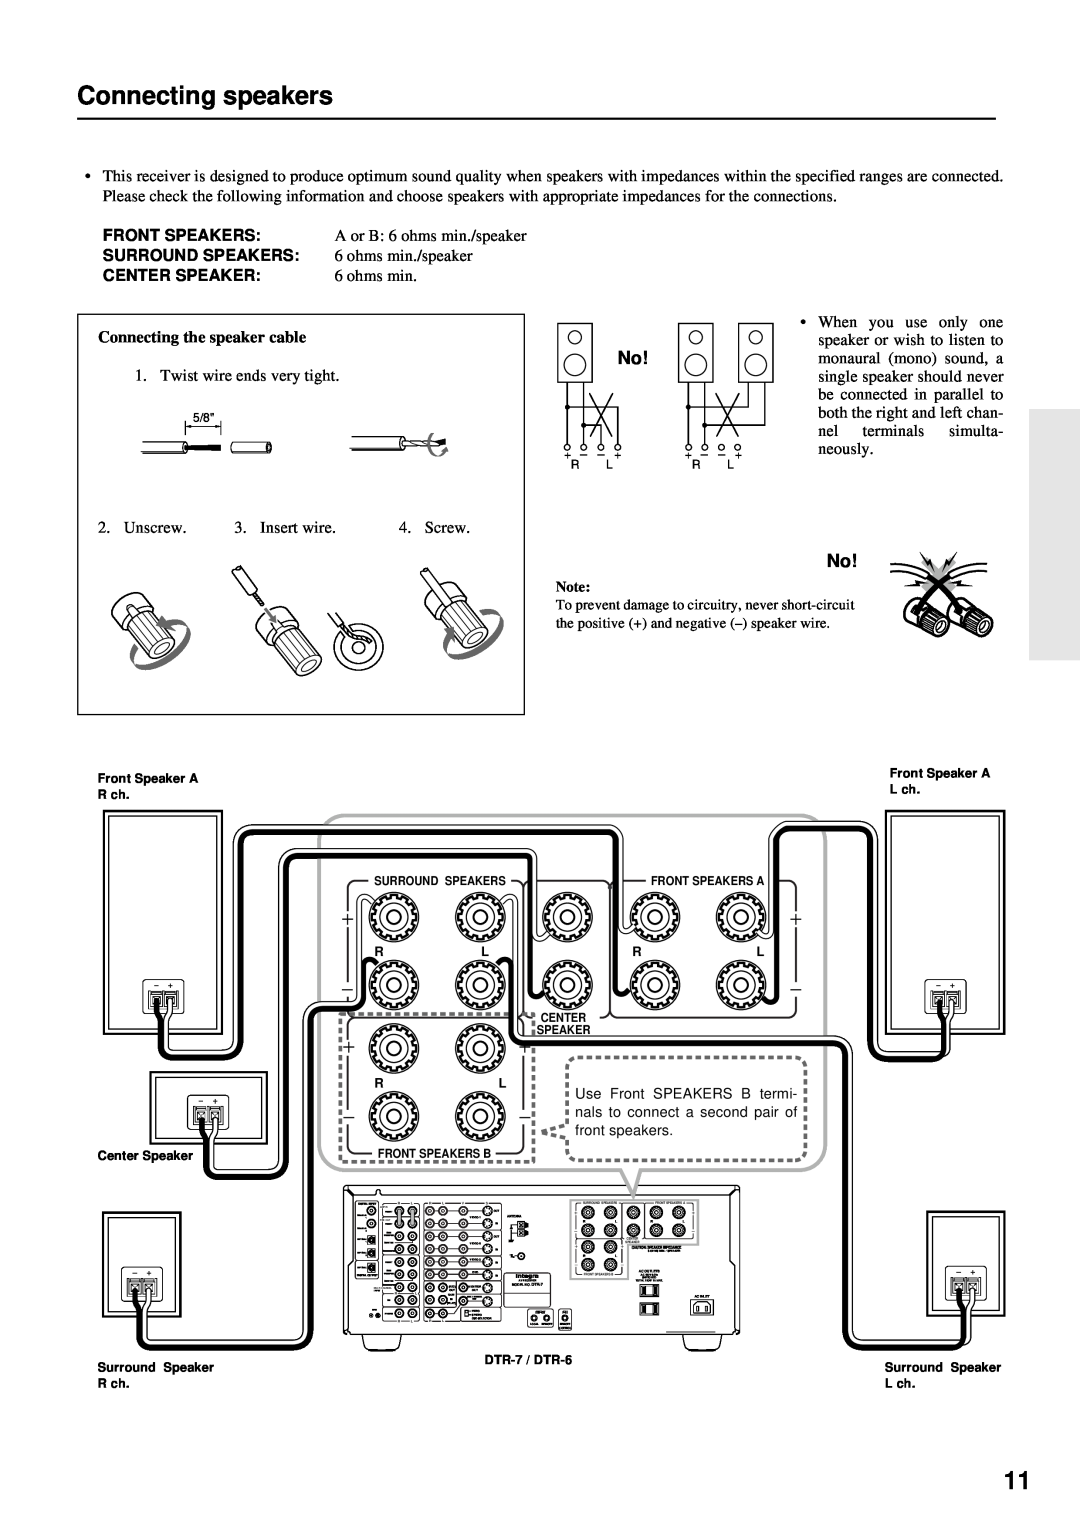 Integra DTR-7 instruction manual Connecting speakers, Front Speakers, Surround Speakers, Center Speaker 